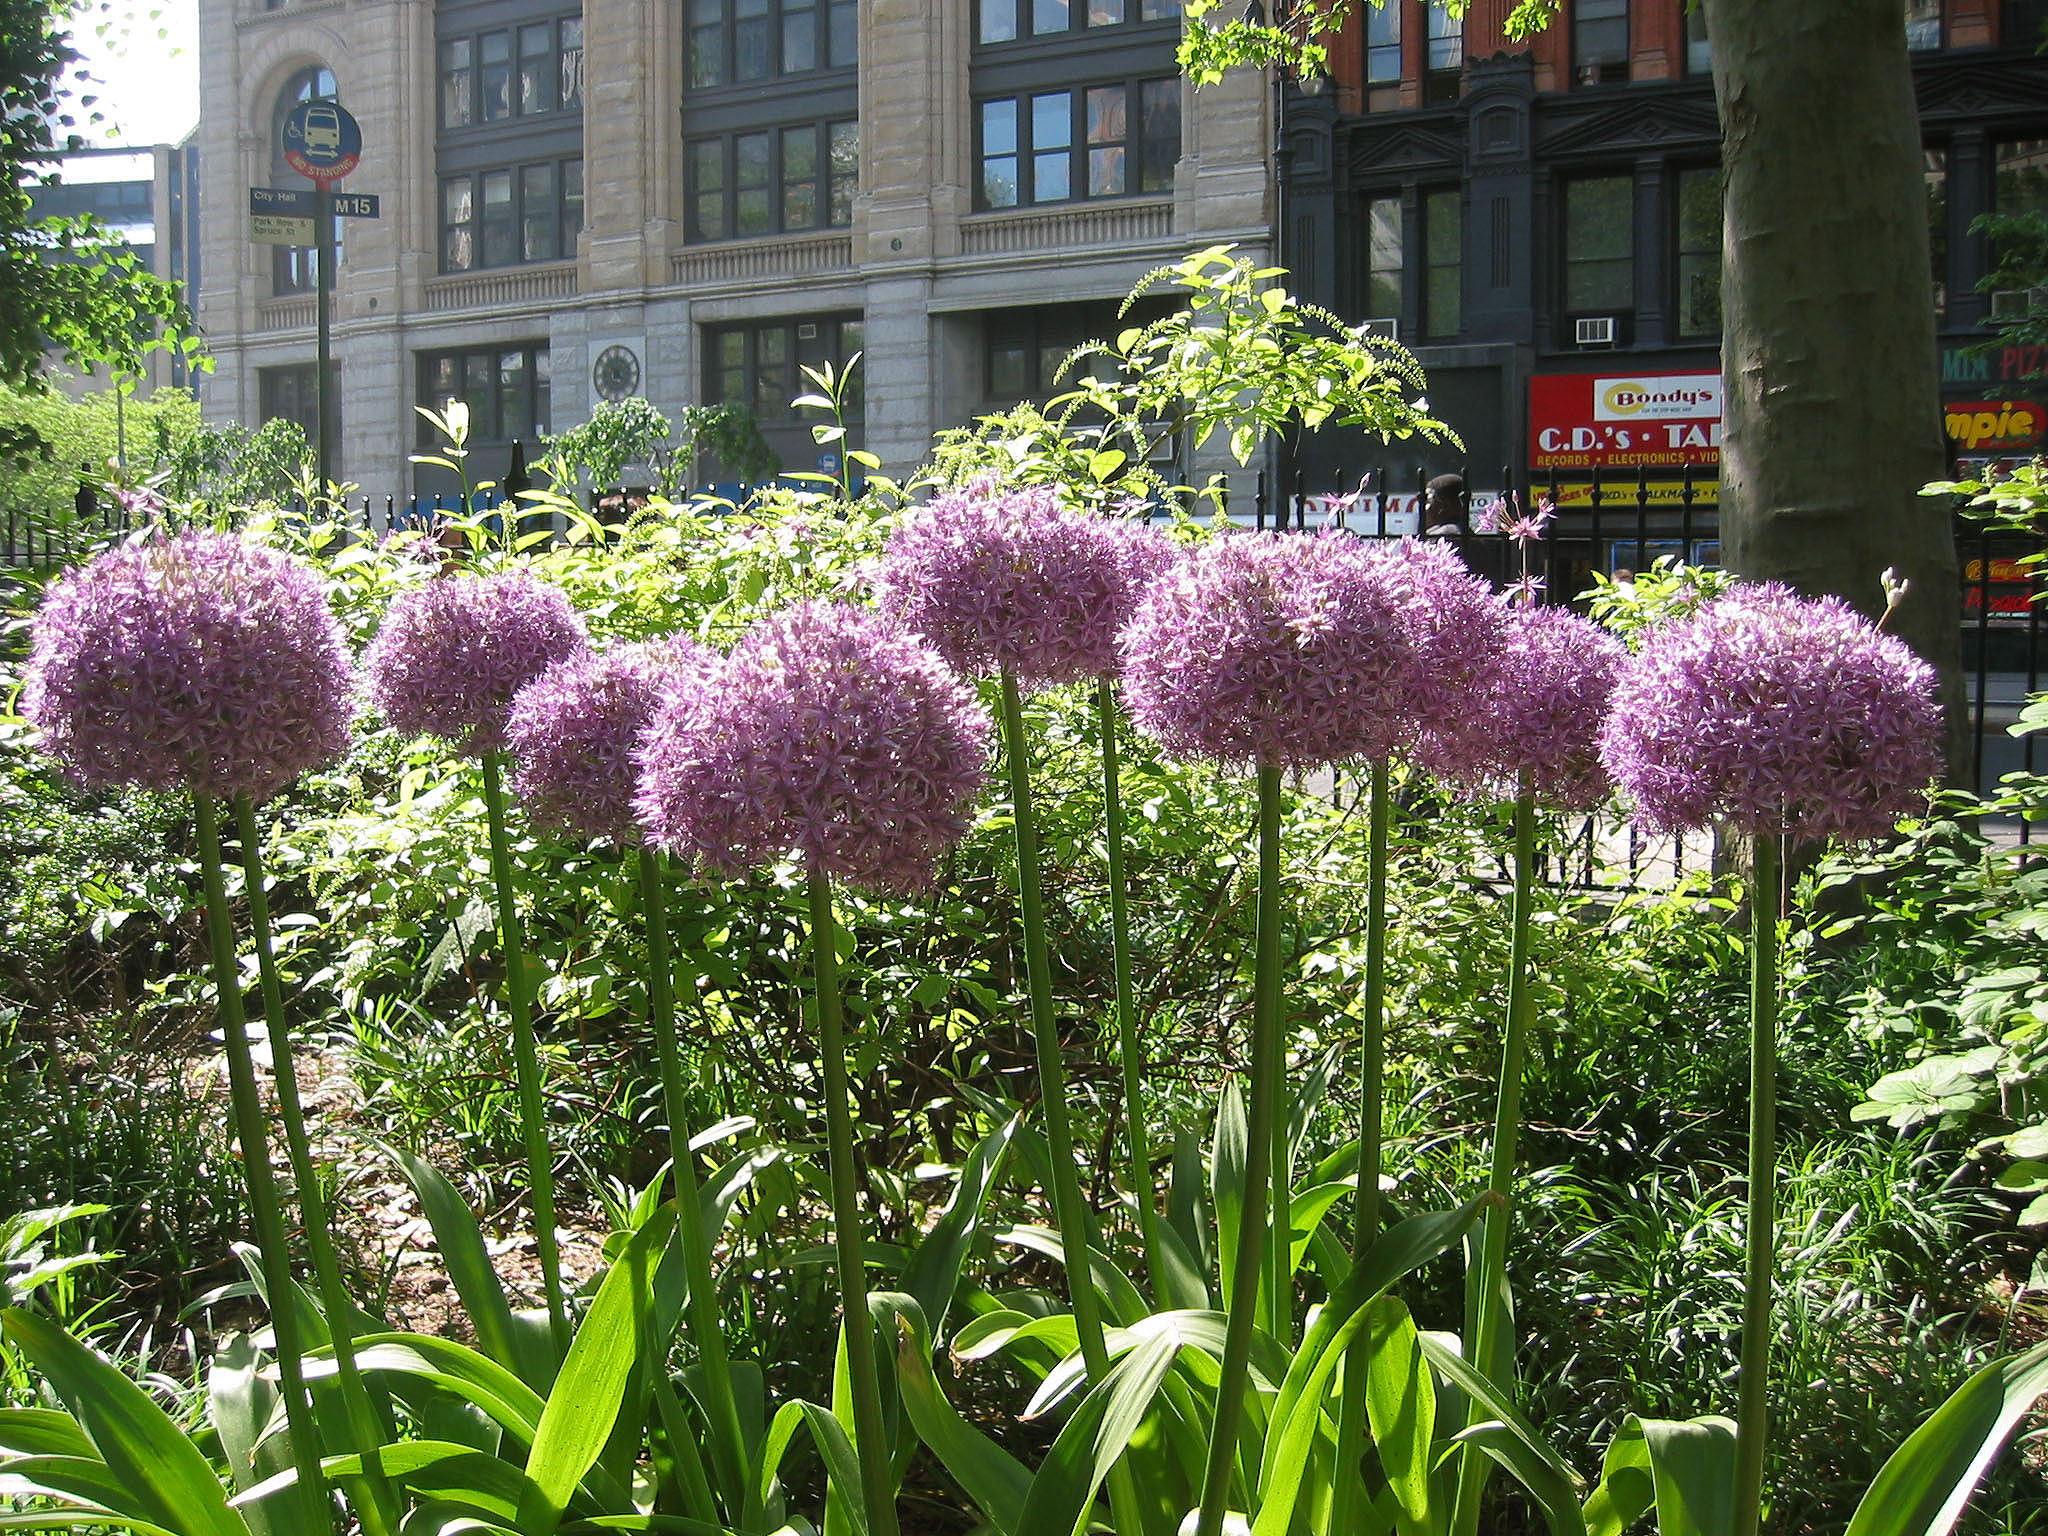 Allium Flowers at City Hall Park